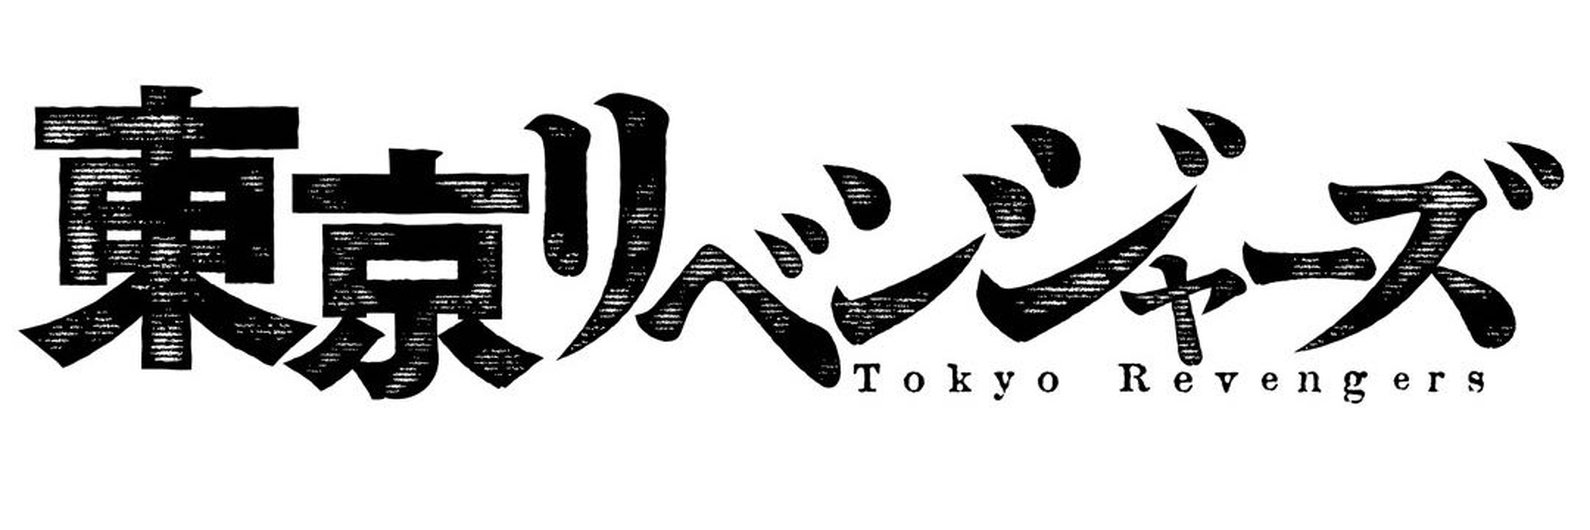 Токийские Мстители название на японском. Логотип токсийскиз Мстителей. Знак токийских мстителей